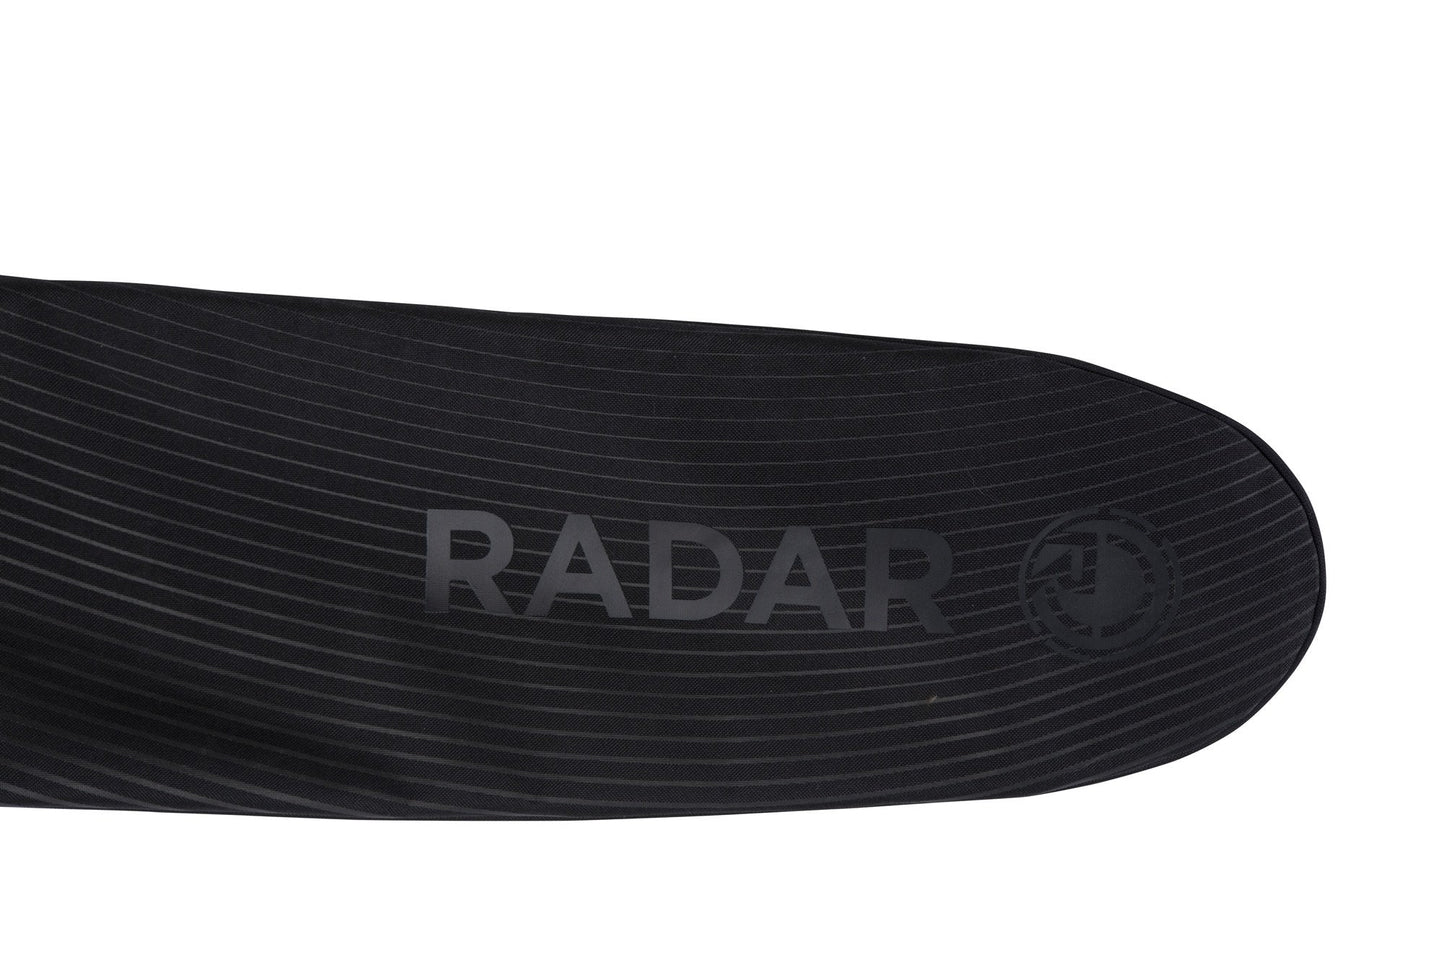 2024 Radar Padded Slalom Case -Radar235160-Navy / Black-63to67